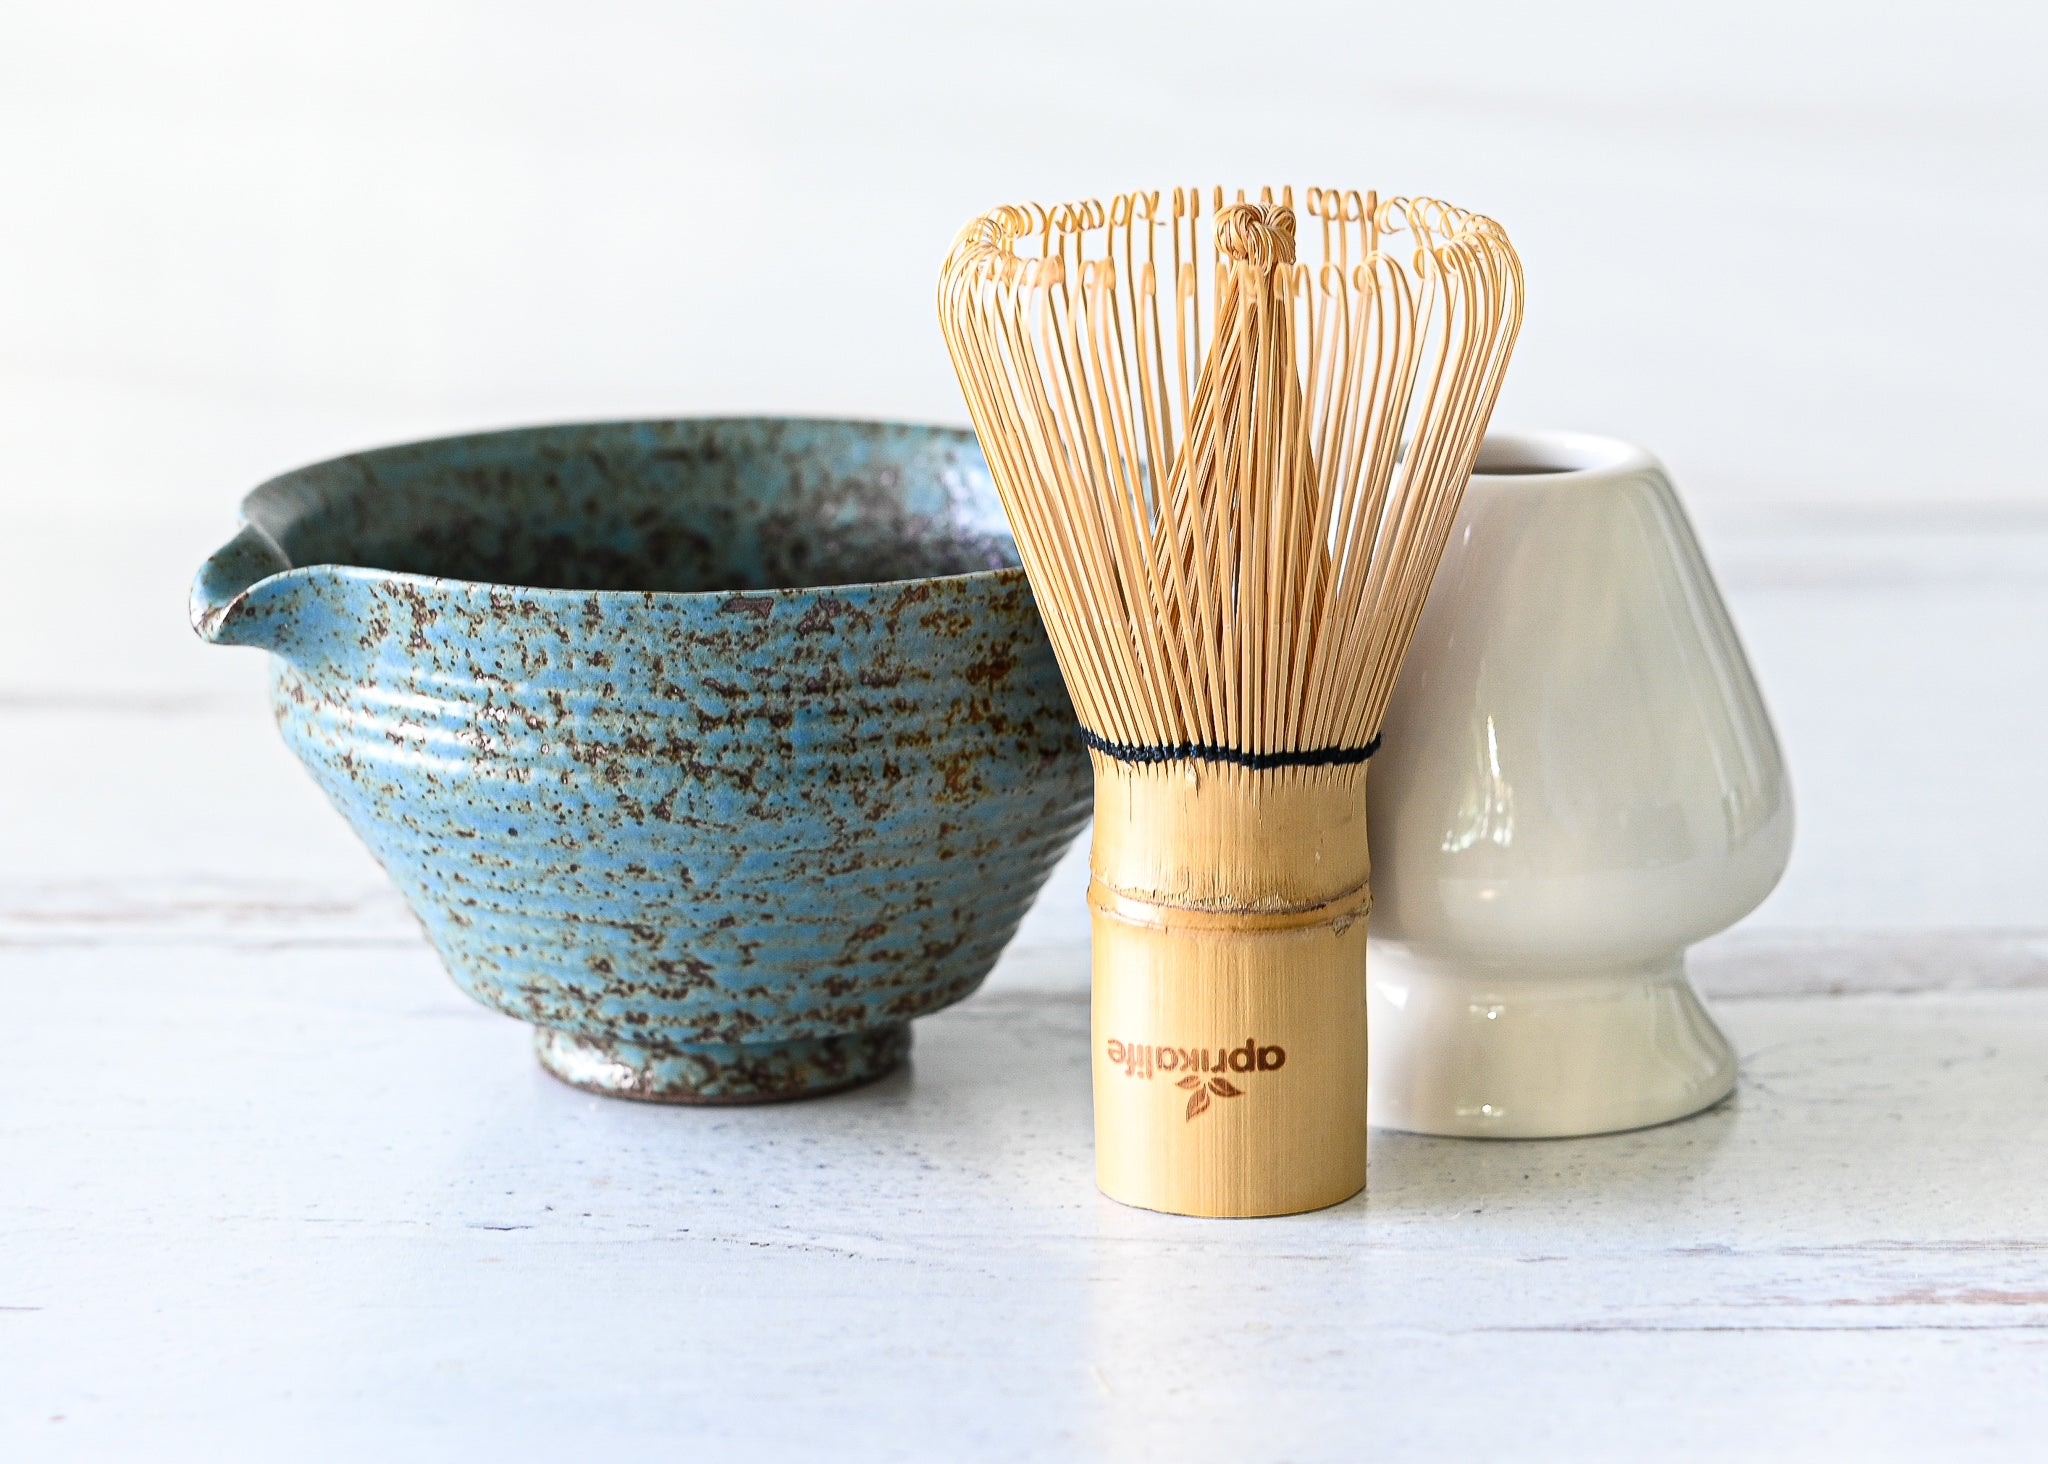 Handmade Matcha Bowl Matcha Gift Set With Bamboo Whisk,whisk